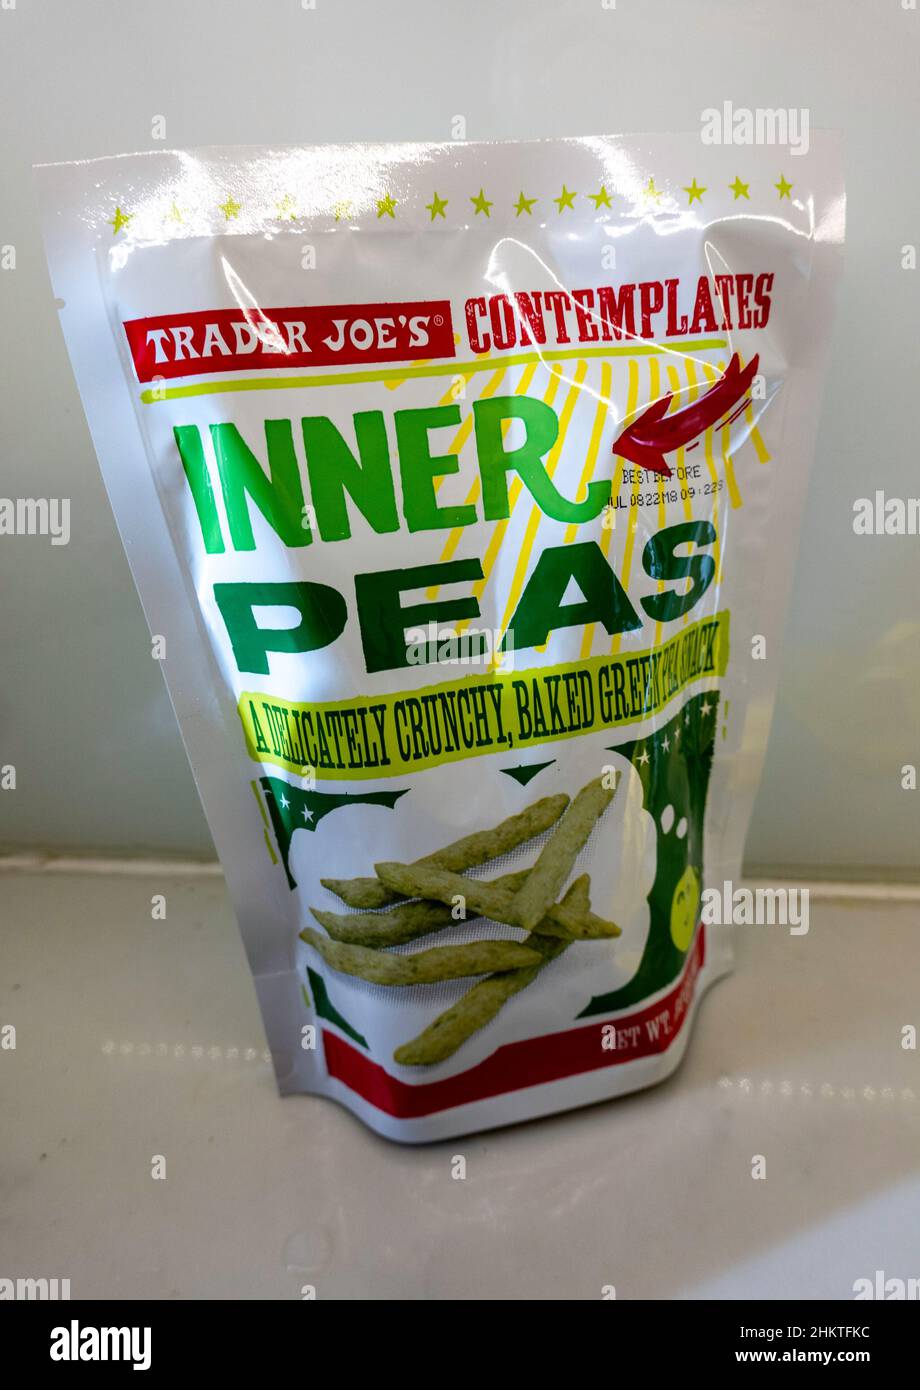 Snack bag of Trader Joe's Inner Peas, USA Stock Photo